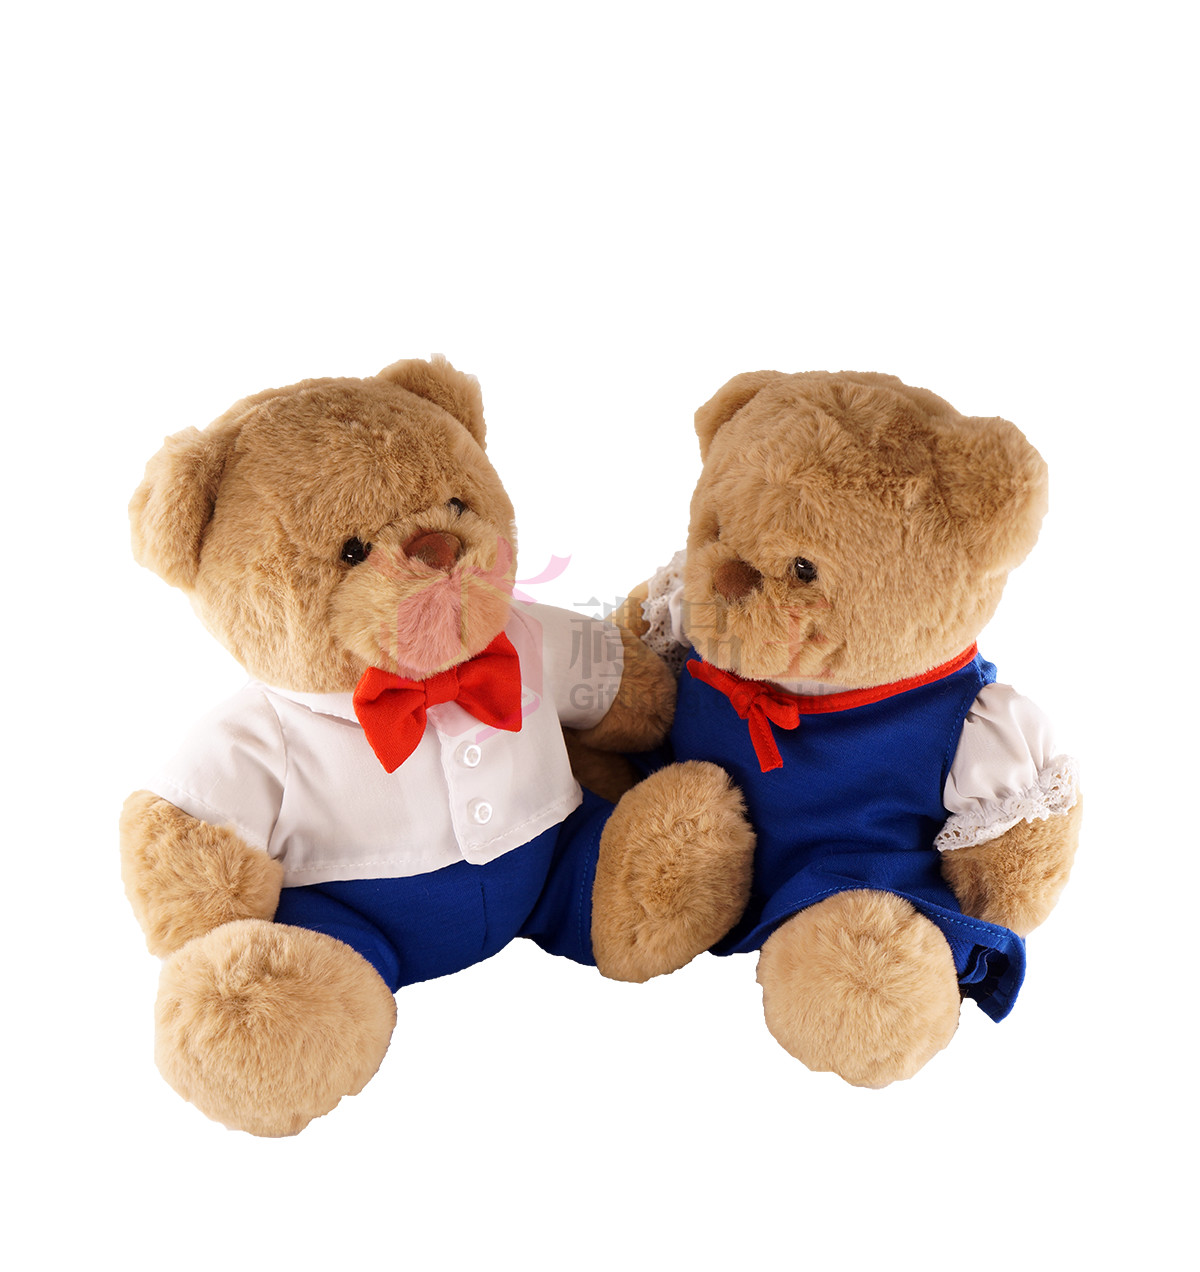 Children's Choir Teddy Bear (Advertising Gifts)